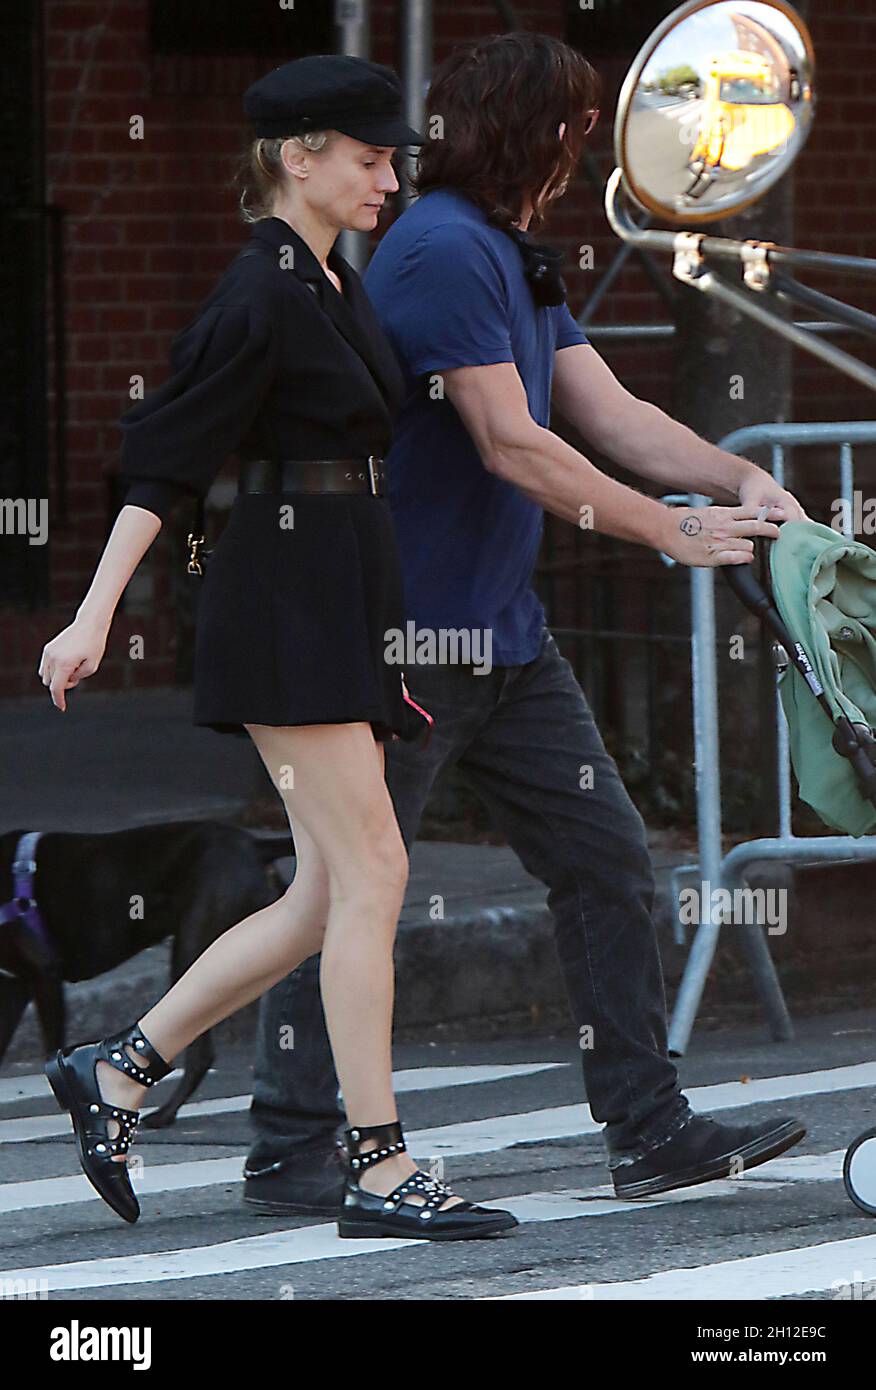 New York, NY, USA. Oktober 2021. Norman Reedus und Diane Kruger sahen am 15. Oktober 2021 in Soho in New York City spazieren. Quelle: Rw/Media Punch/Alamy Live News Stockfoto